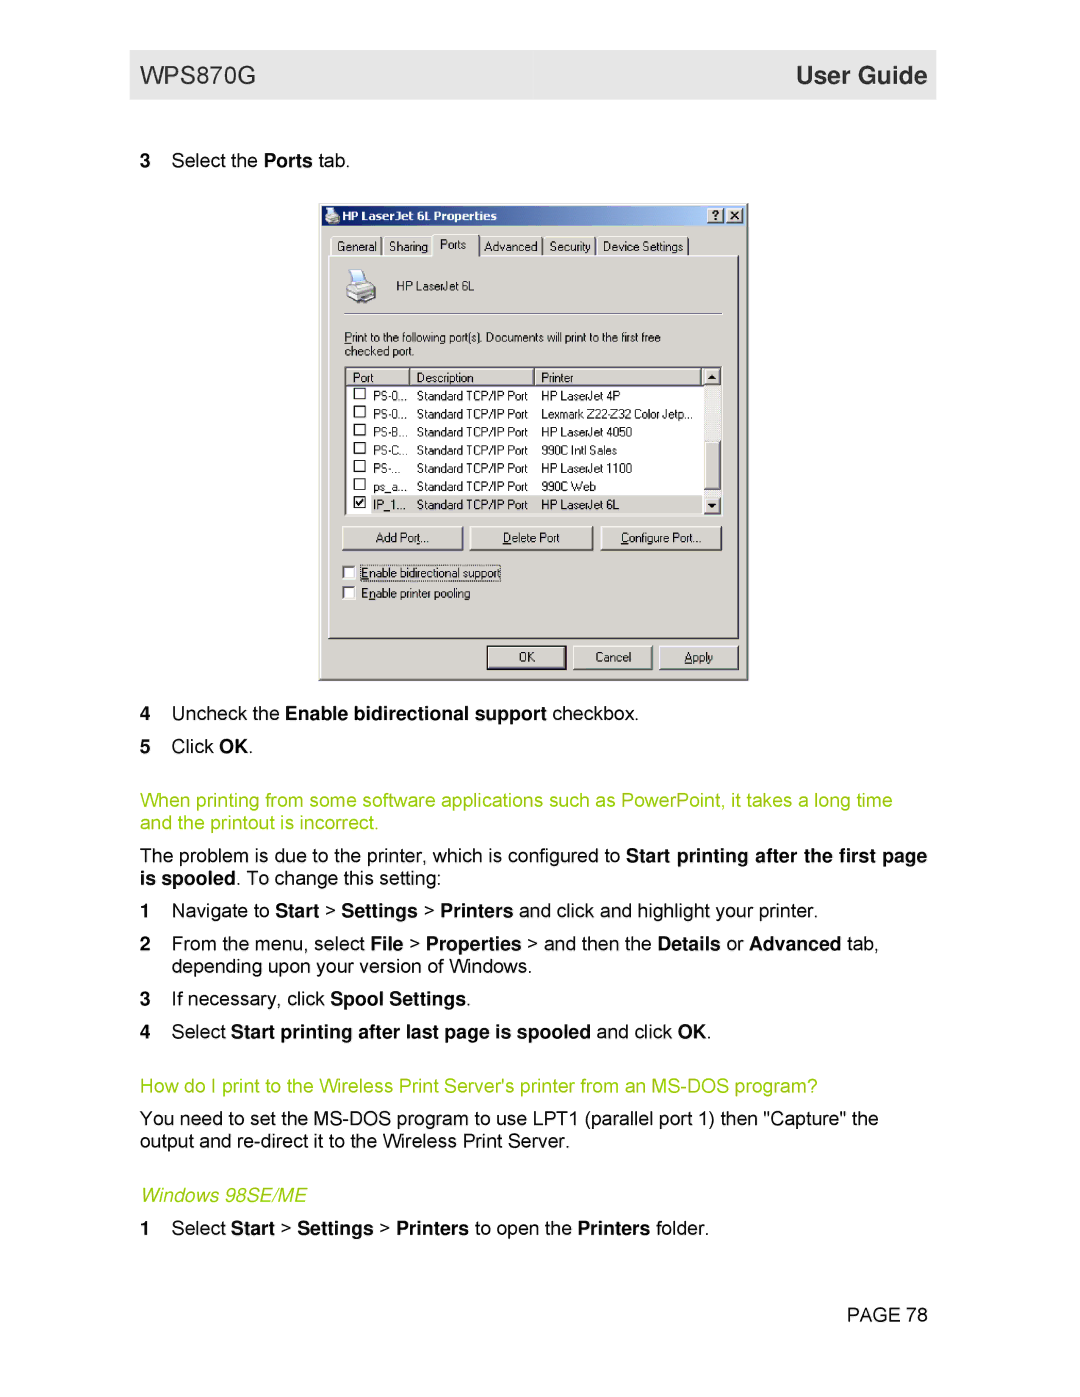 Motorola WPS870G manual Uncheck the Enable bidirectional support checkbox 